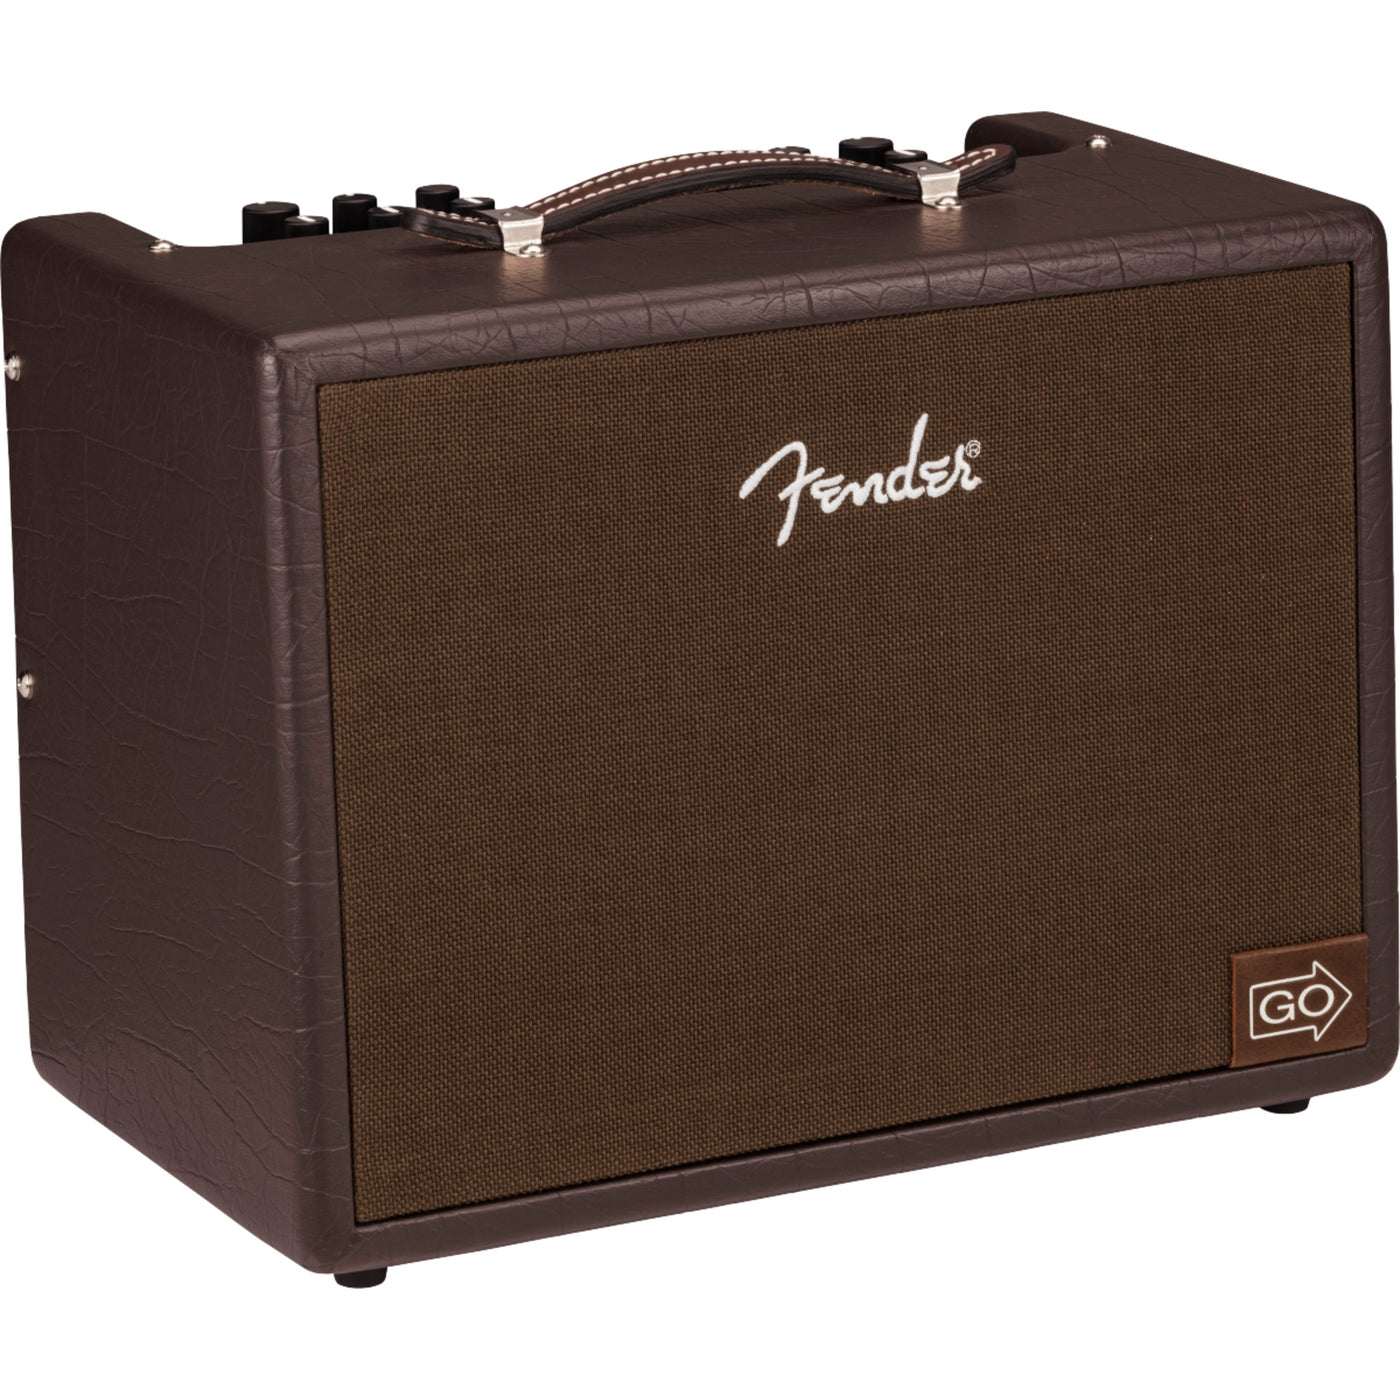 Fender Acoustic Junior GO 120V Amplifier, Dark Brown (2314400000)